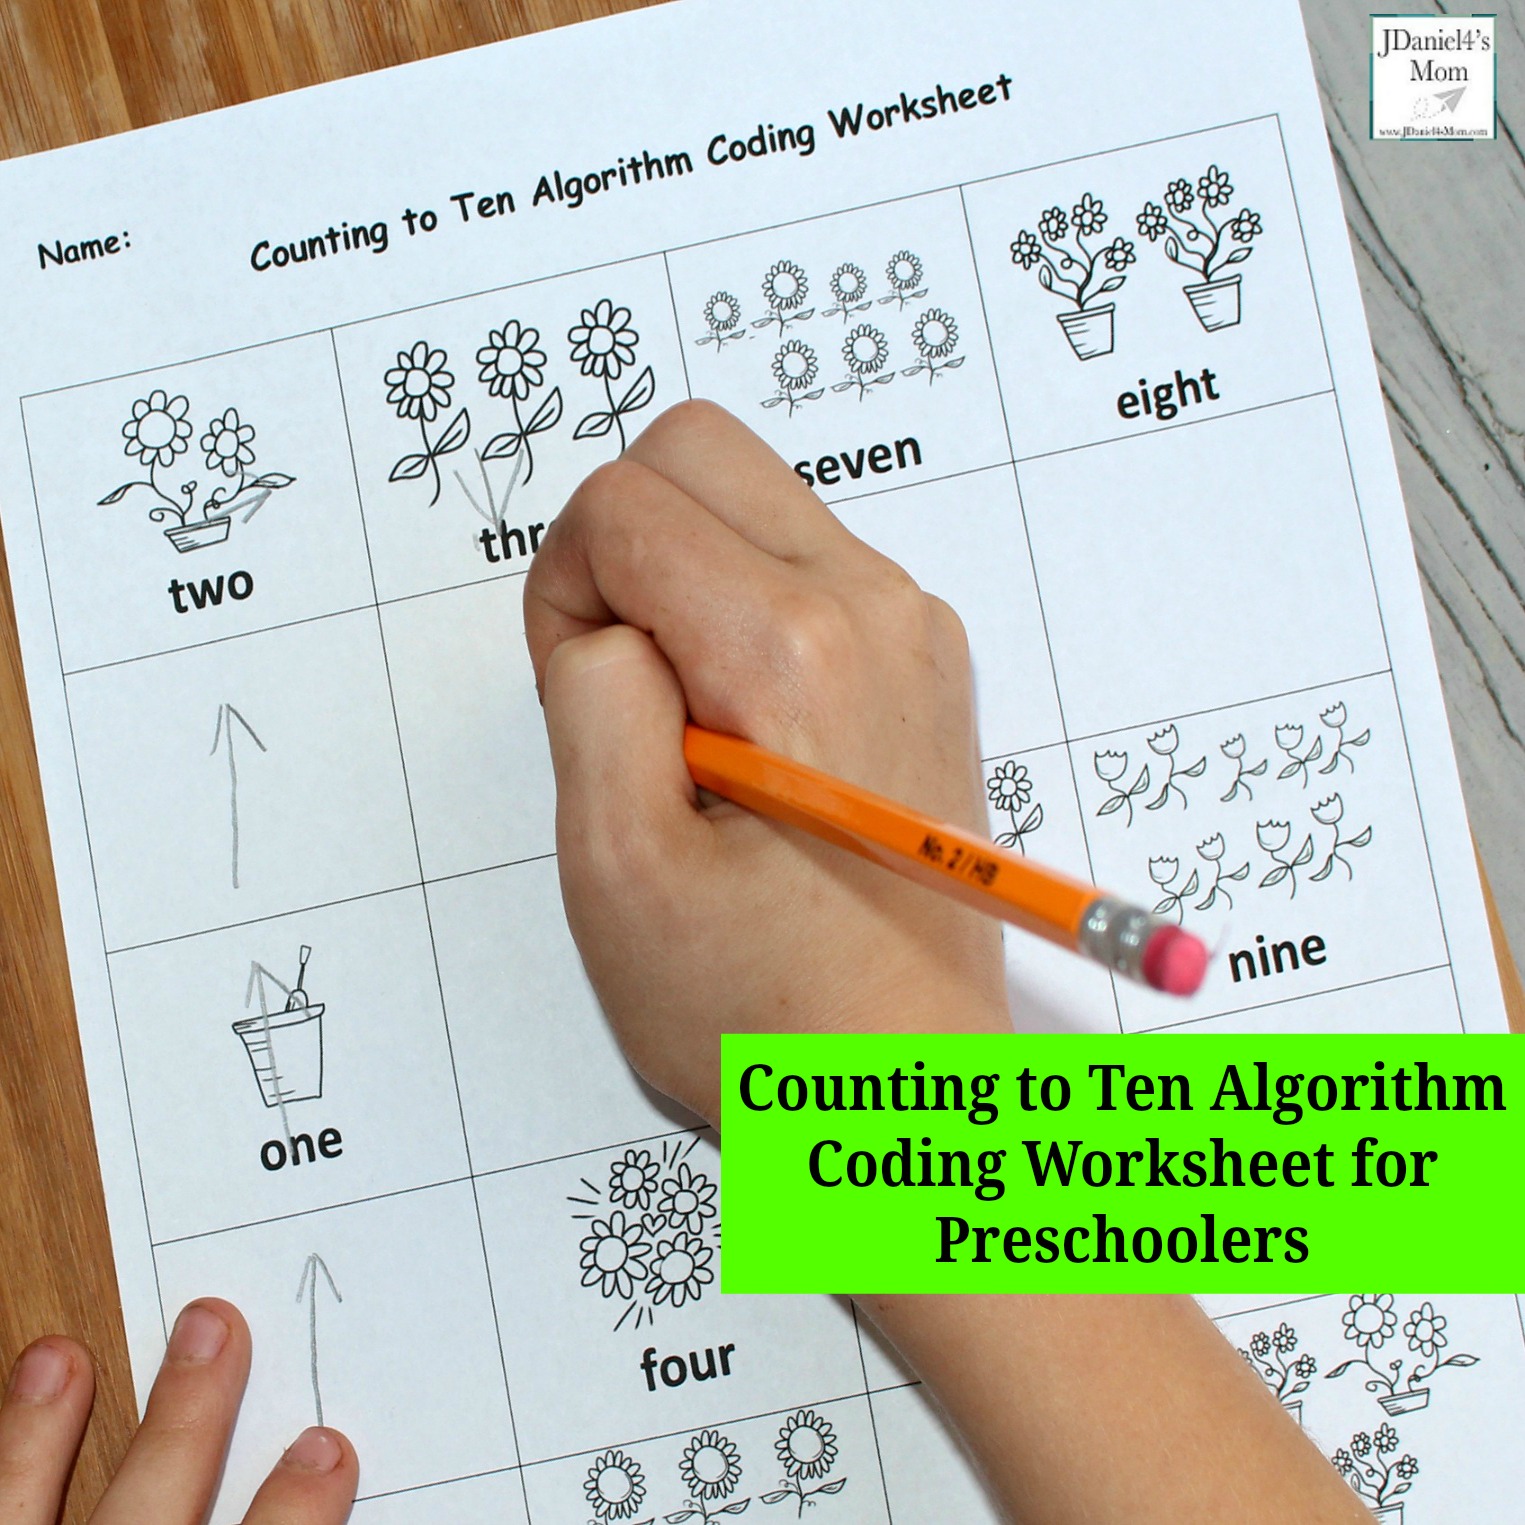 Counting to Ten Algorithm Coding Worksheet for Preschoolers